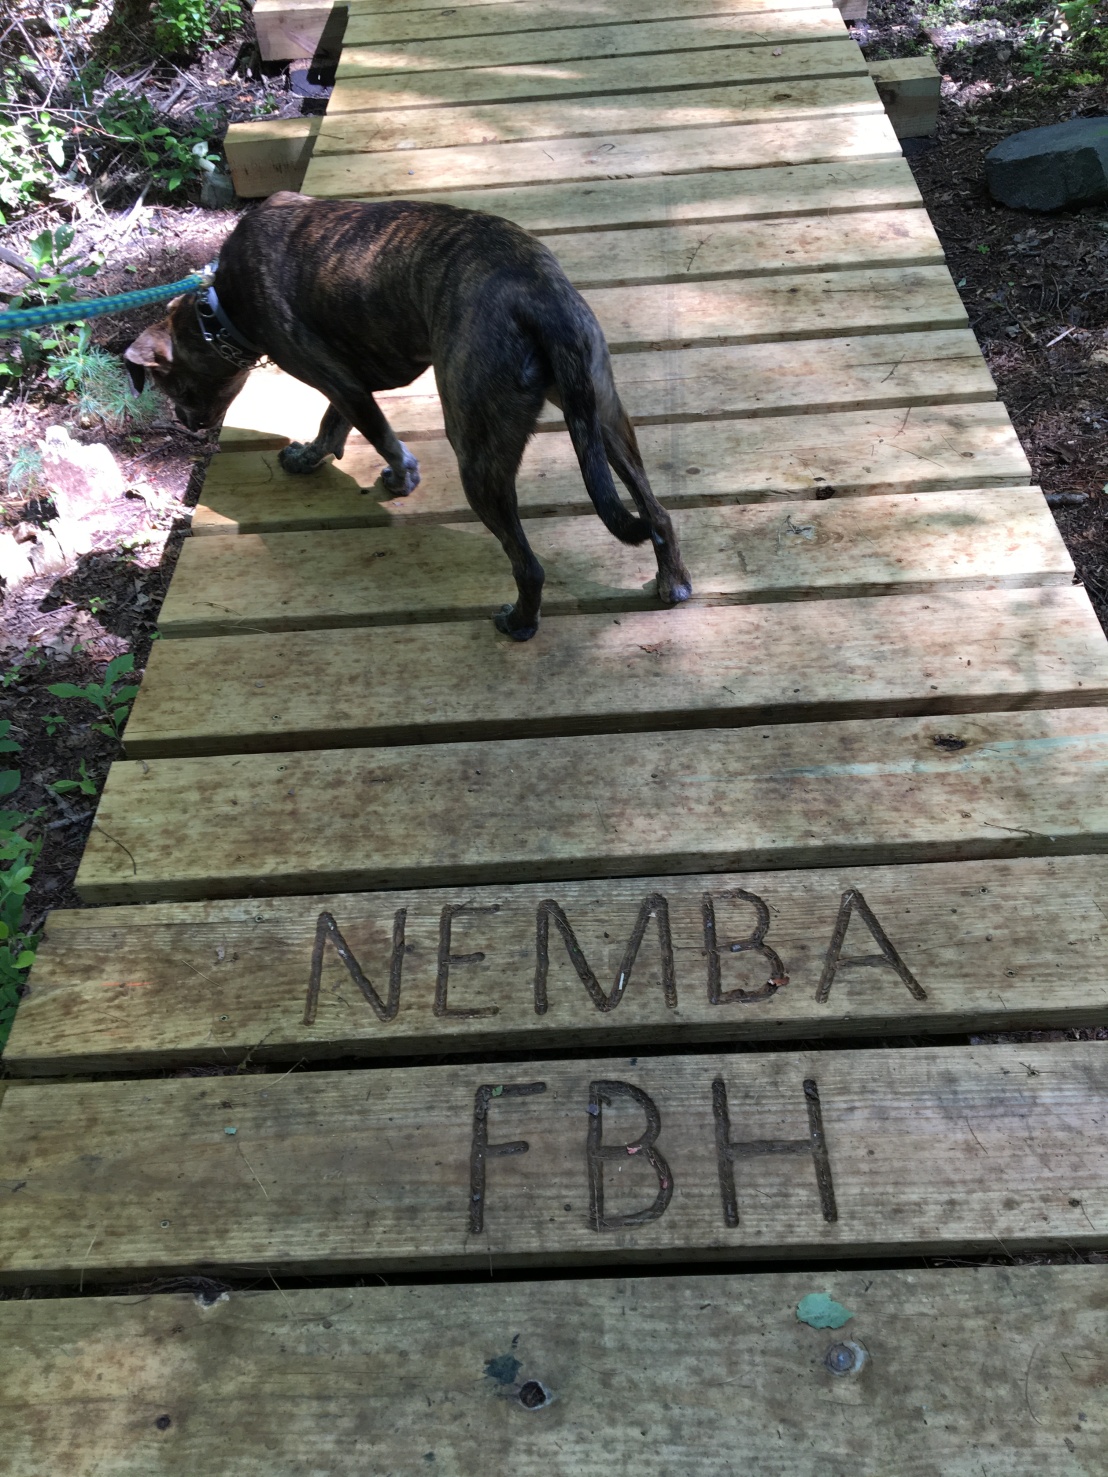 NEMBA FBH bridge on Forest Path near Chickatawbut Road